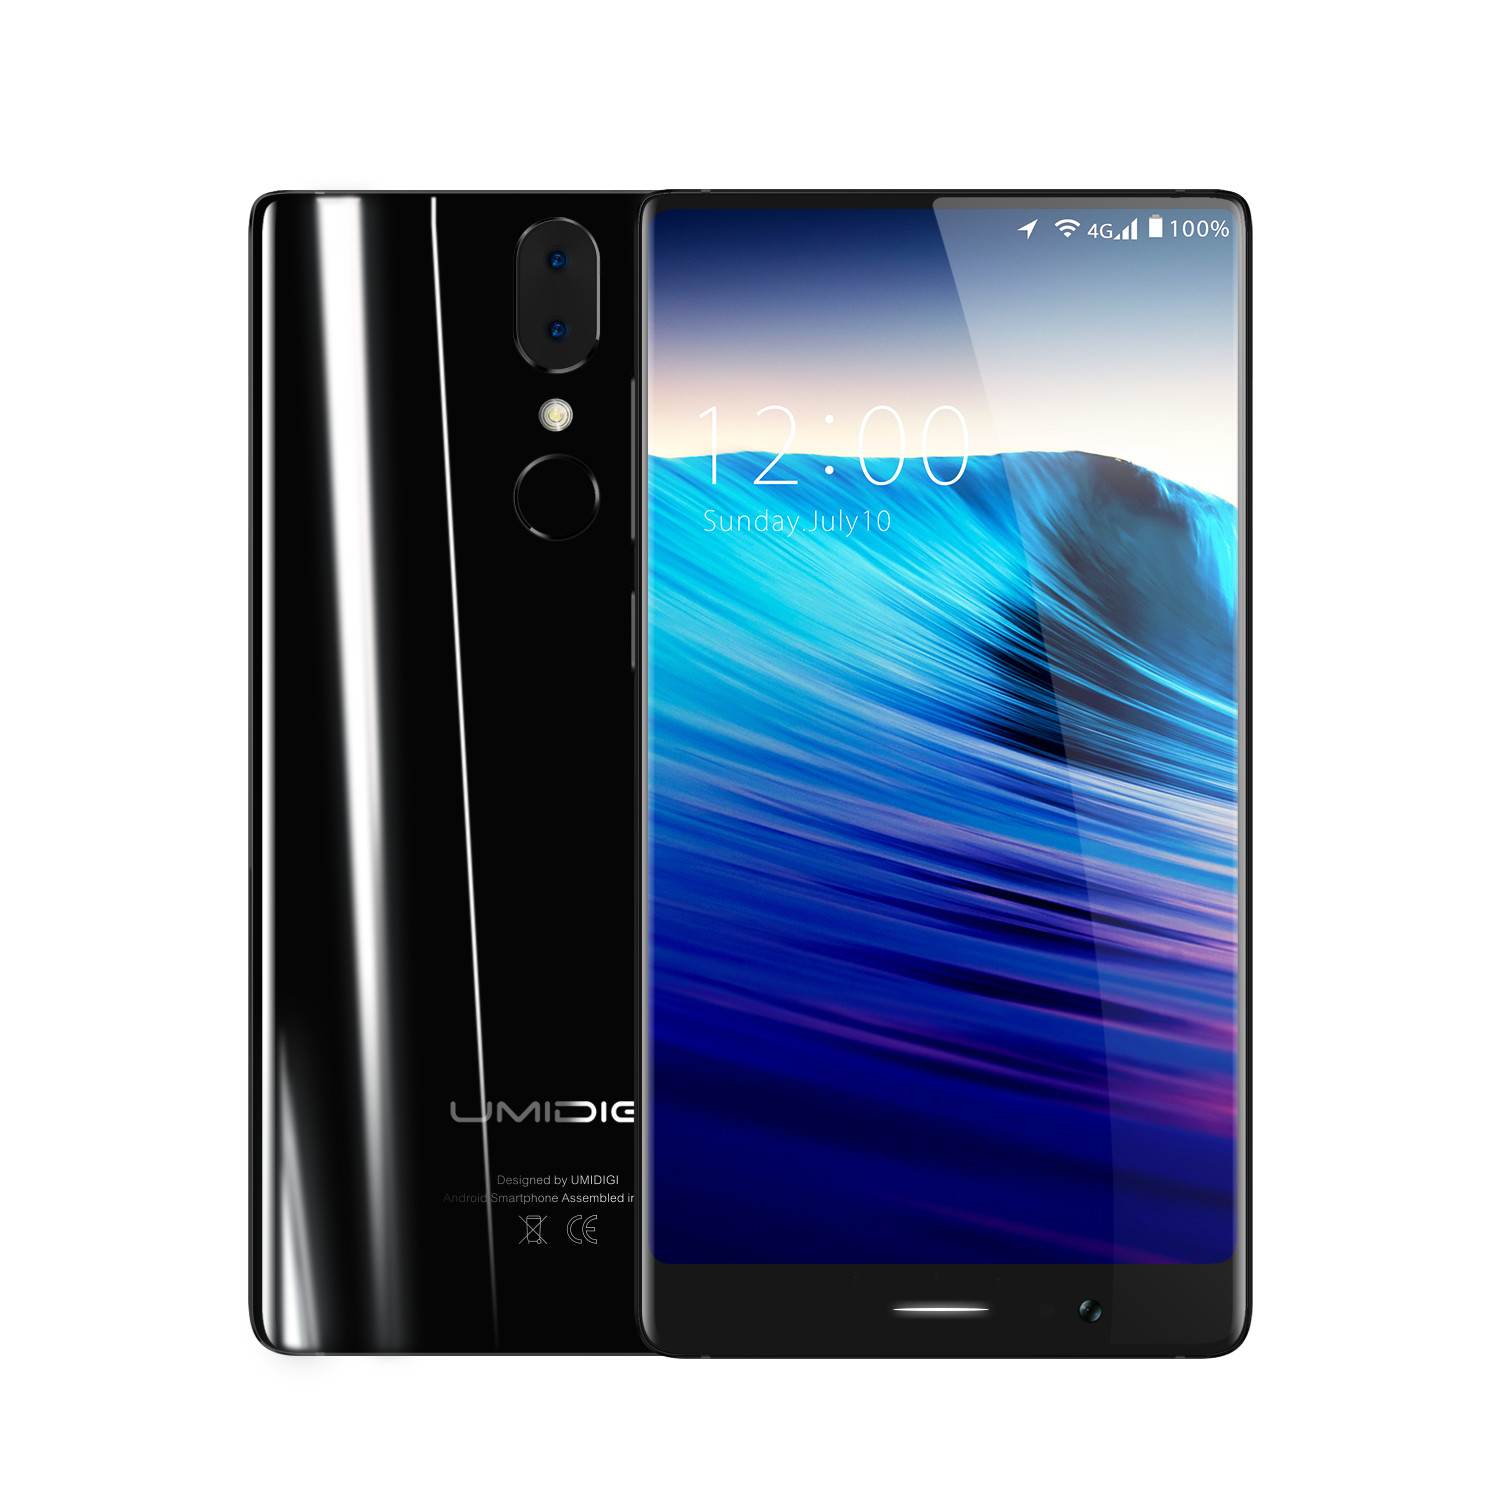 

UMIDIGI Crystal 5.5" мобильный телефон 4G Смартфон Android 7,0 4GB RAM 64GB ROM MTK6750T Octa core 4G Smartphone